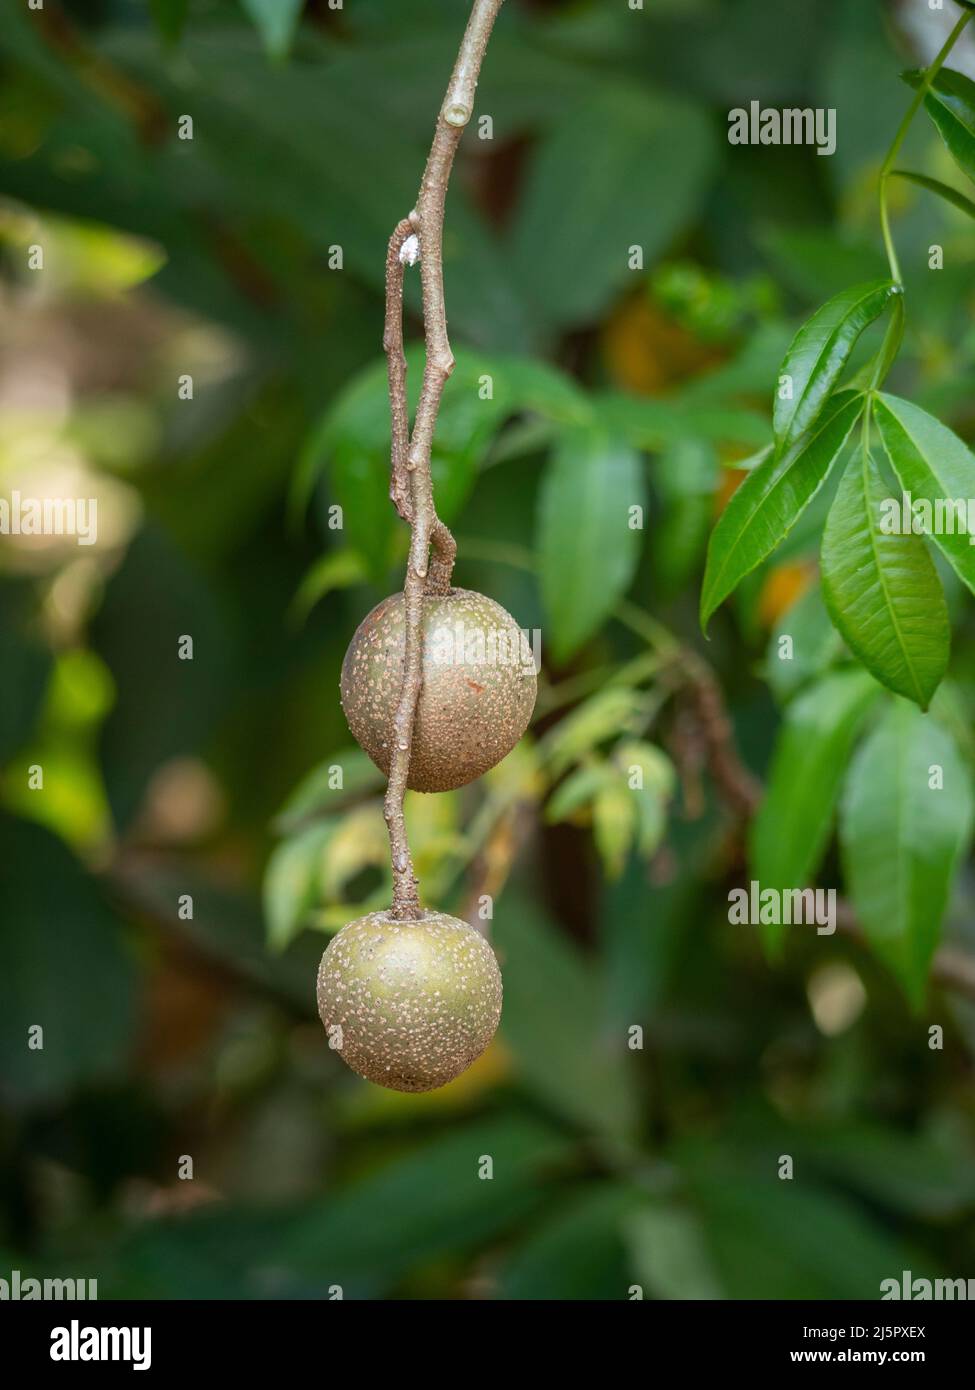 Crataeva fruit on the tree, comes from Amazon rainforest, Brazil Stock Photo